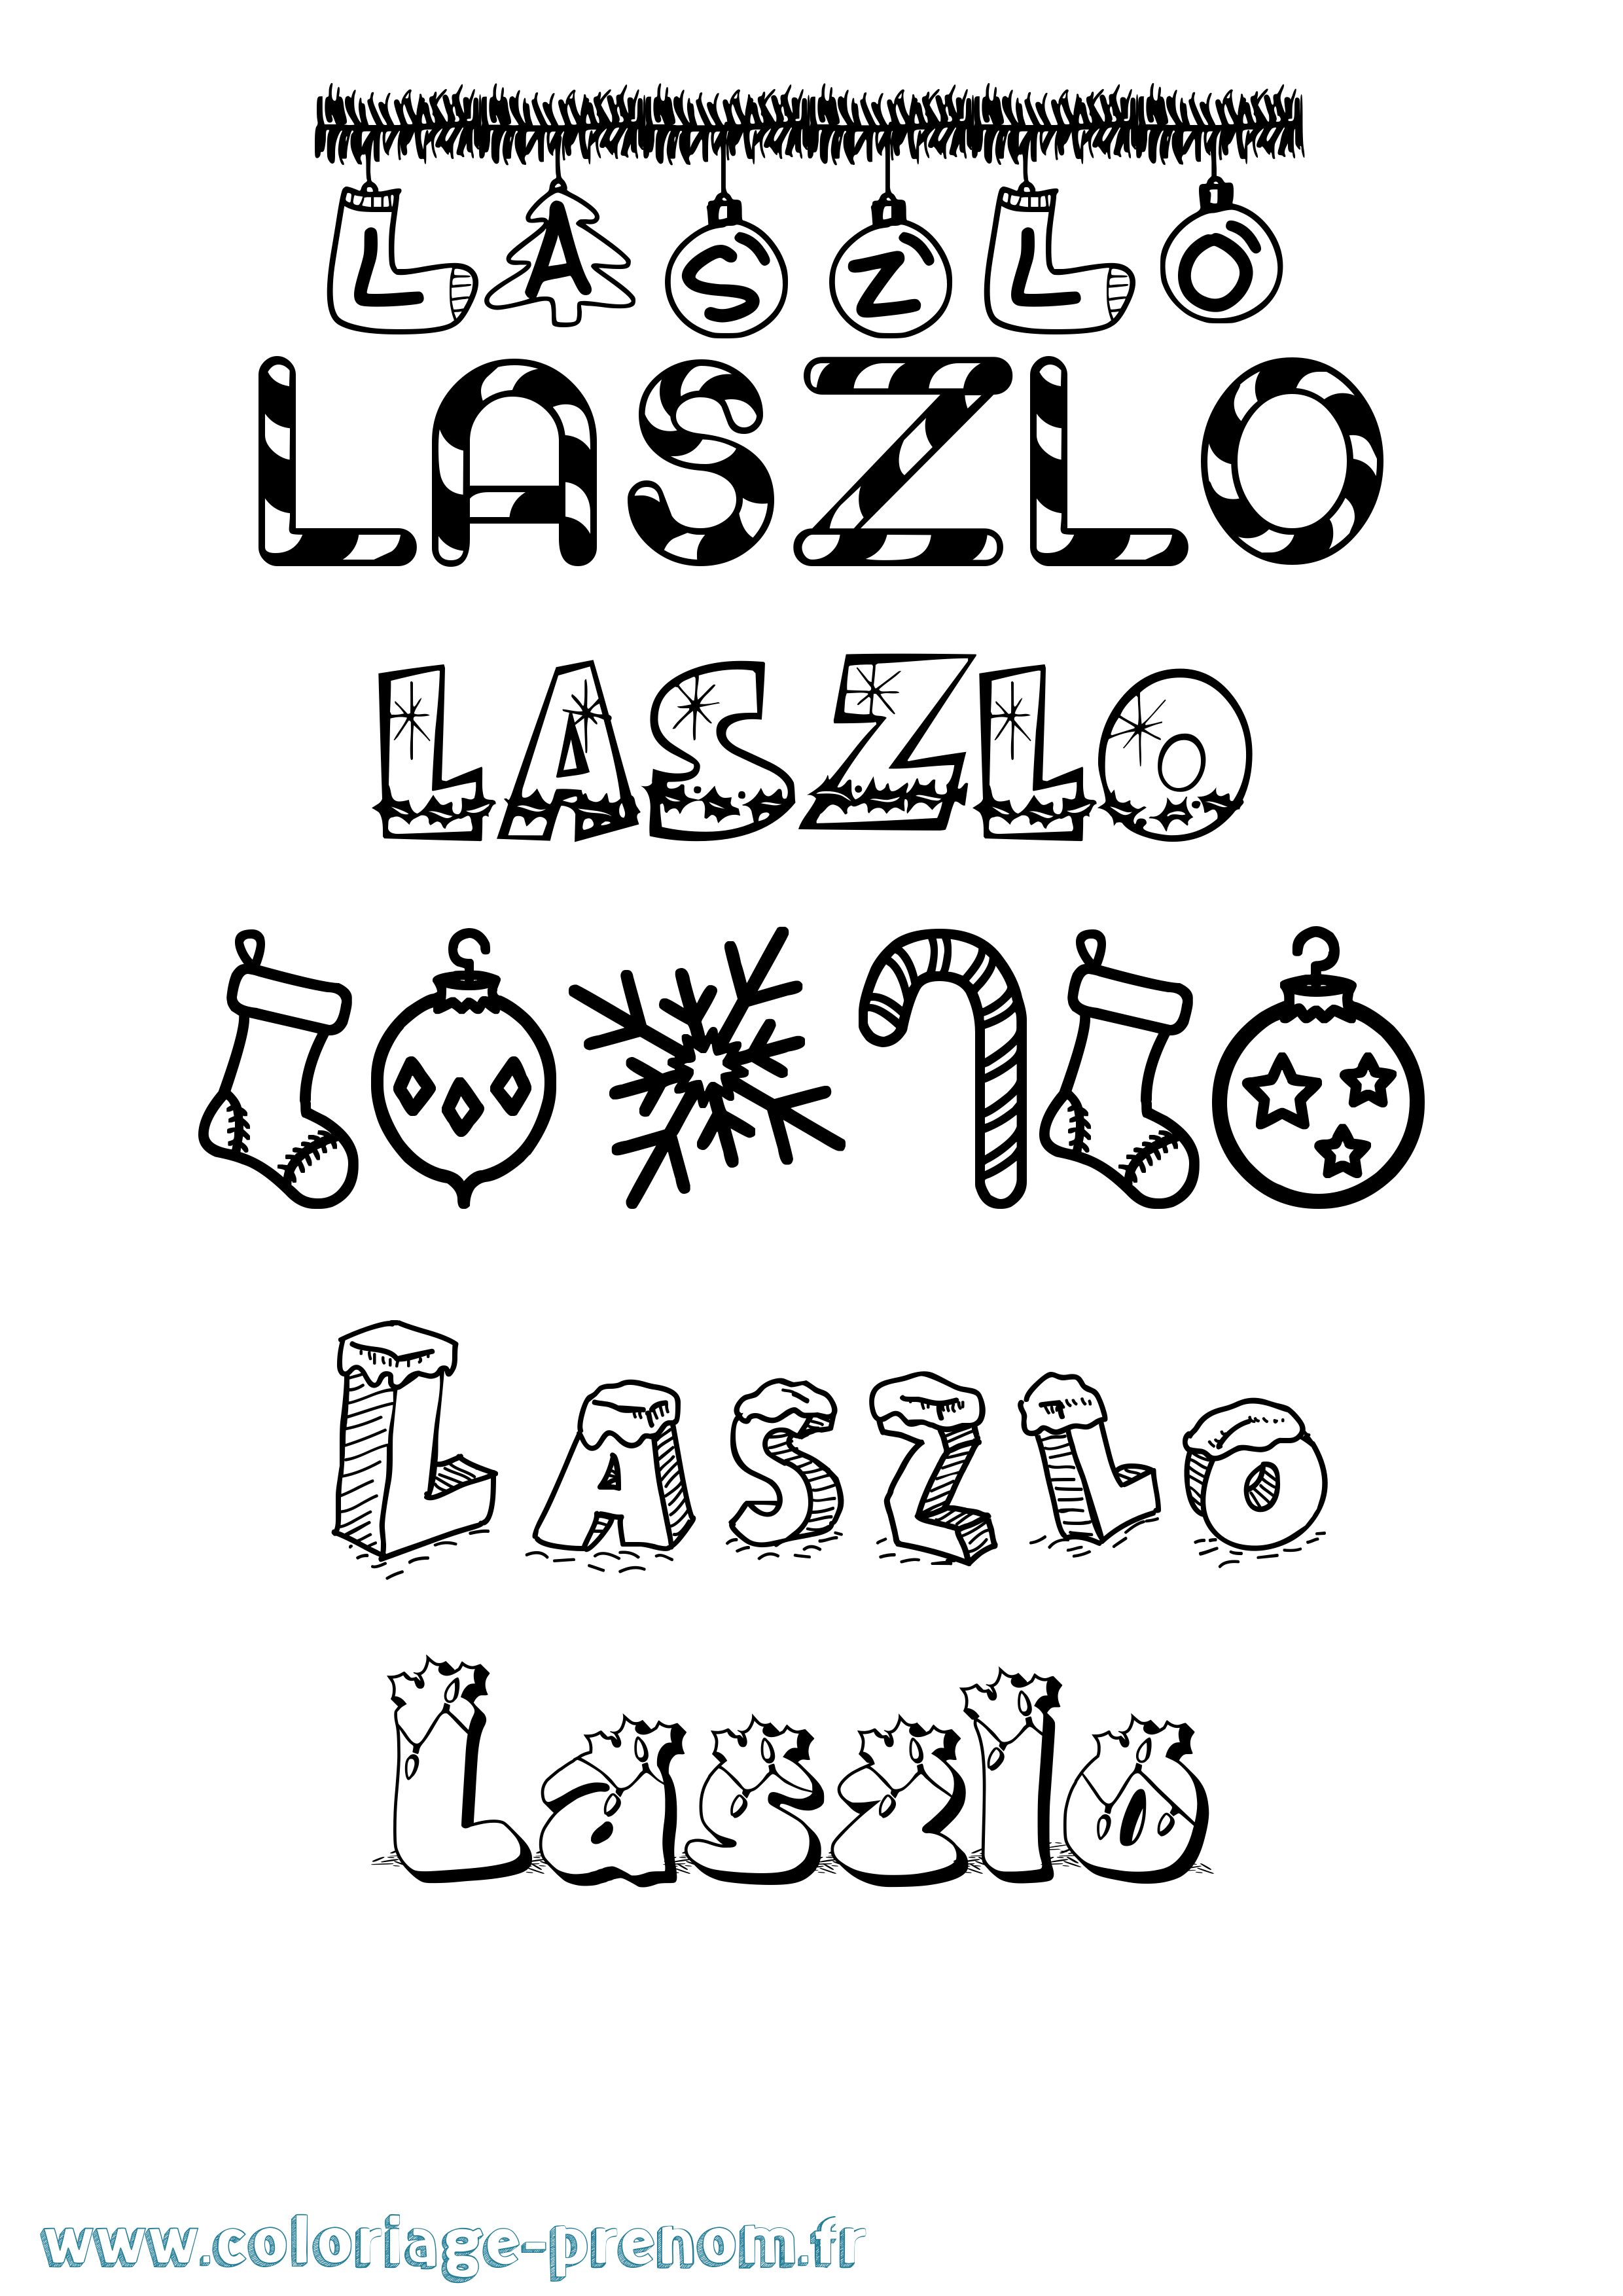 Coloriage prénom Laszlo